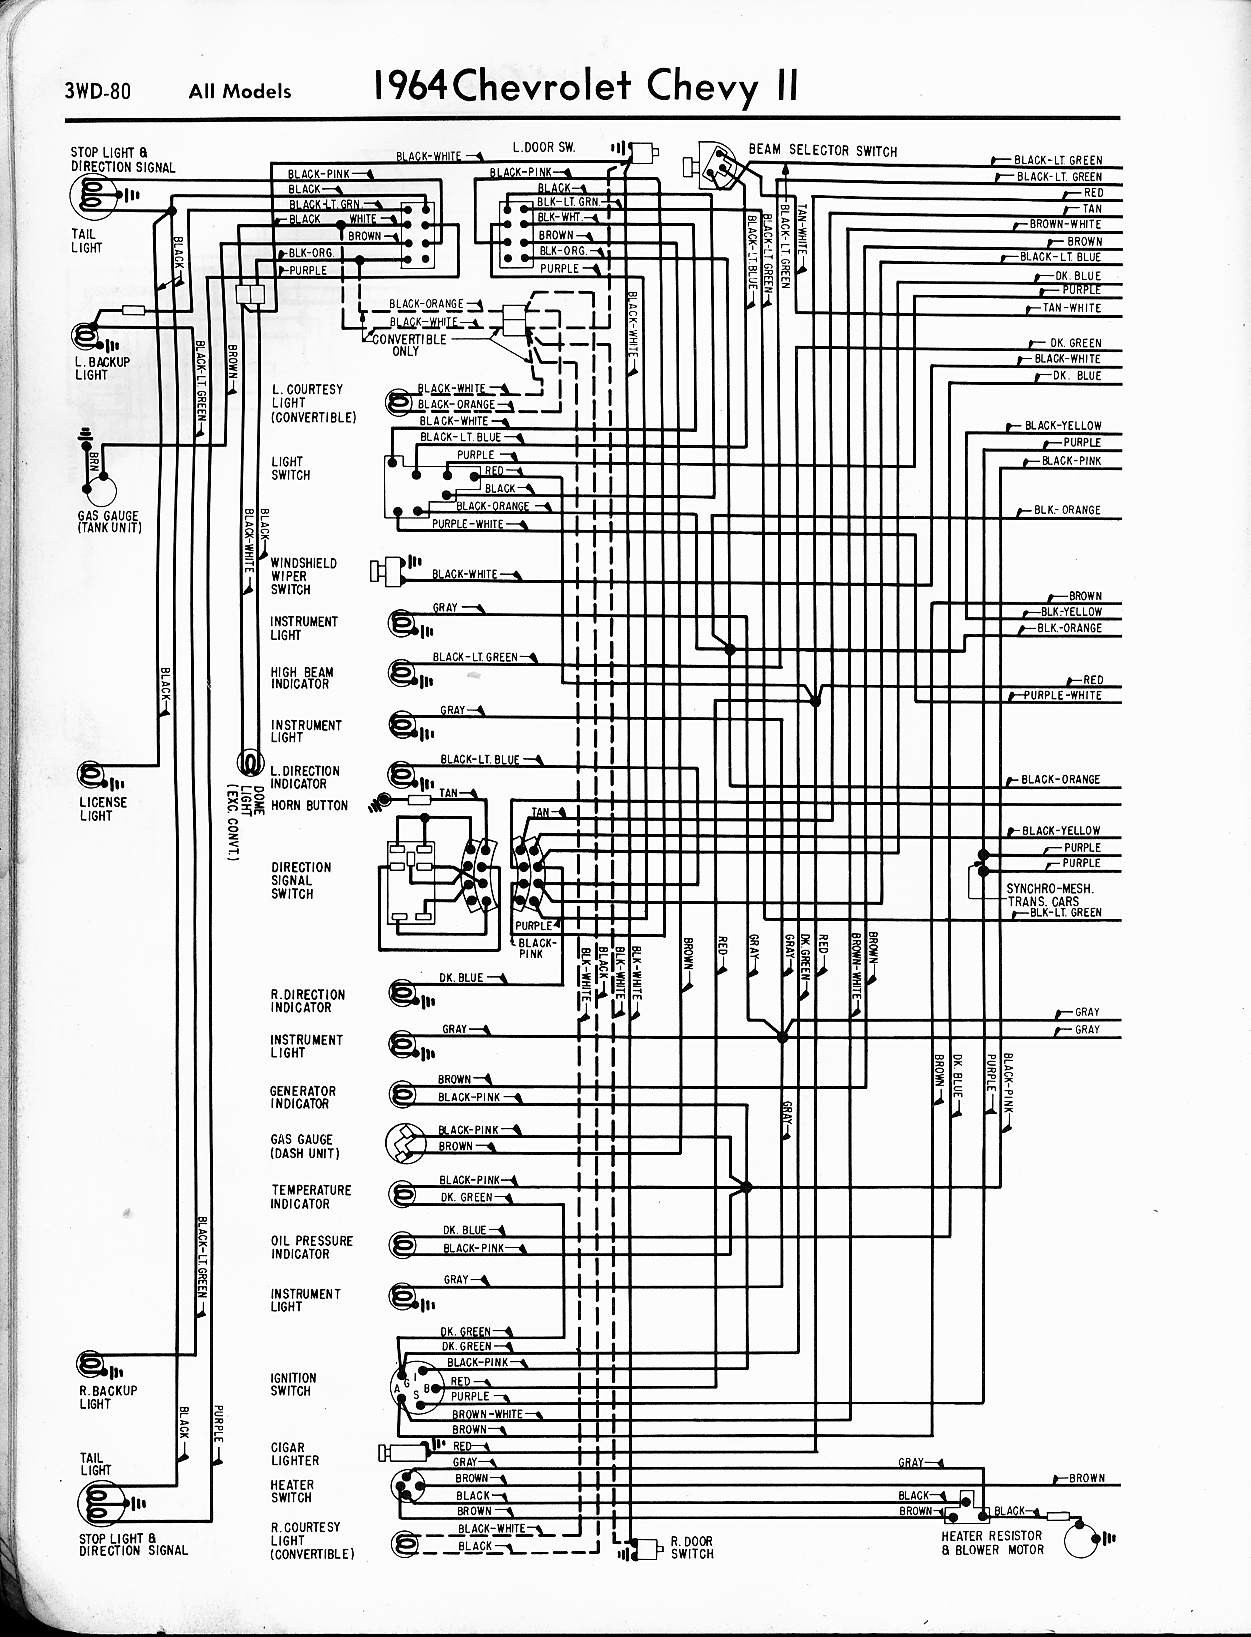 1982 Chevy Truck Wiring Diagram 57 65 Chevy Wiring Diagrams Of 1982 Chevy Truck Wiring Diagram